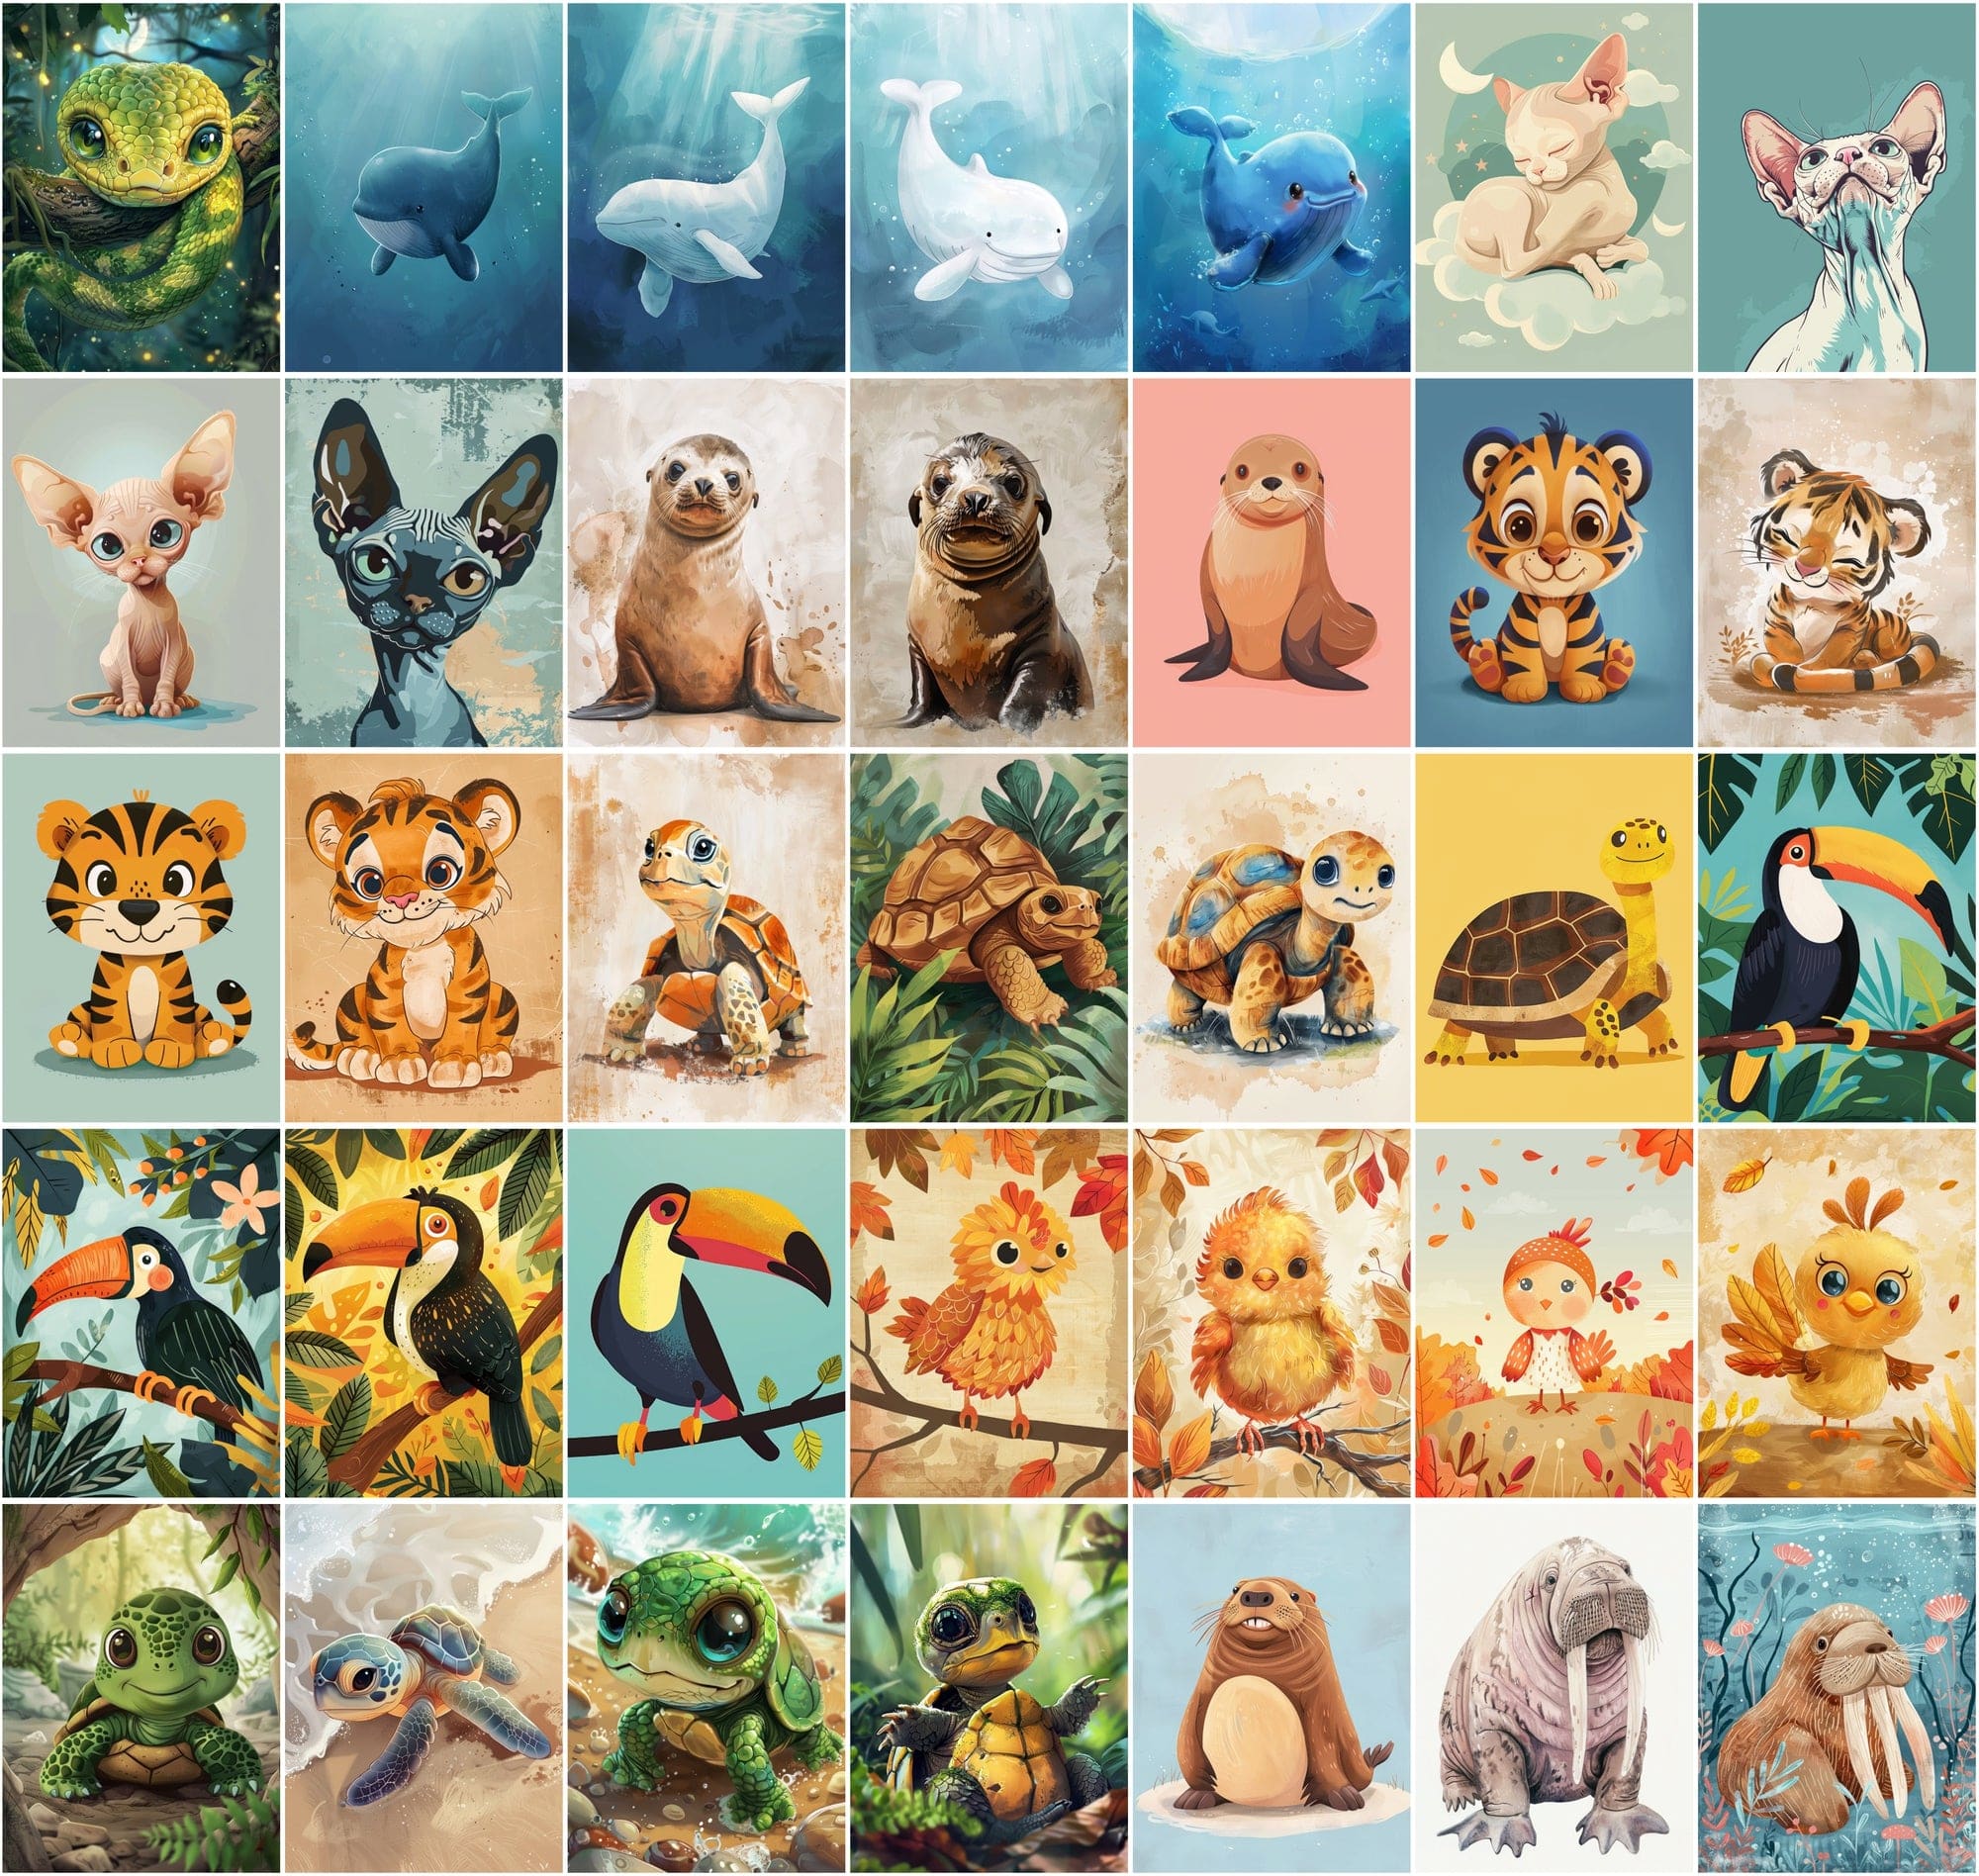 Colorful Animal Nursery Wall Art Prints - Commercial License Included Digital Download Sumobundle